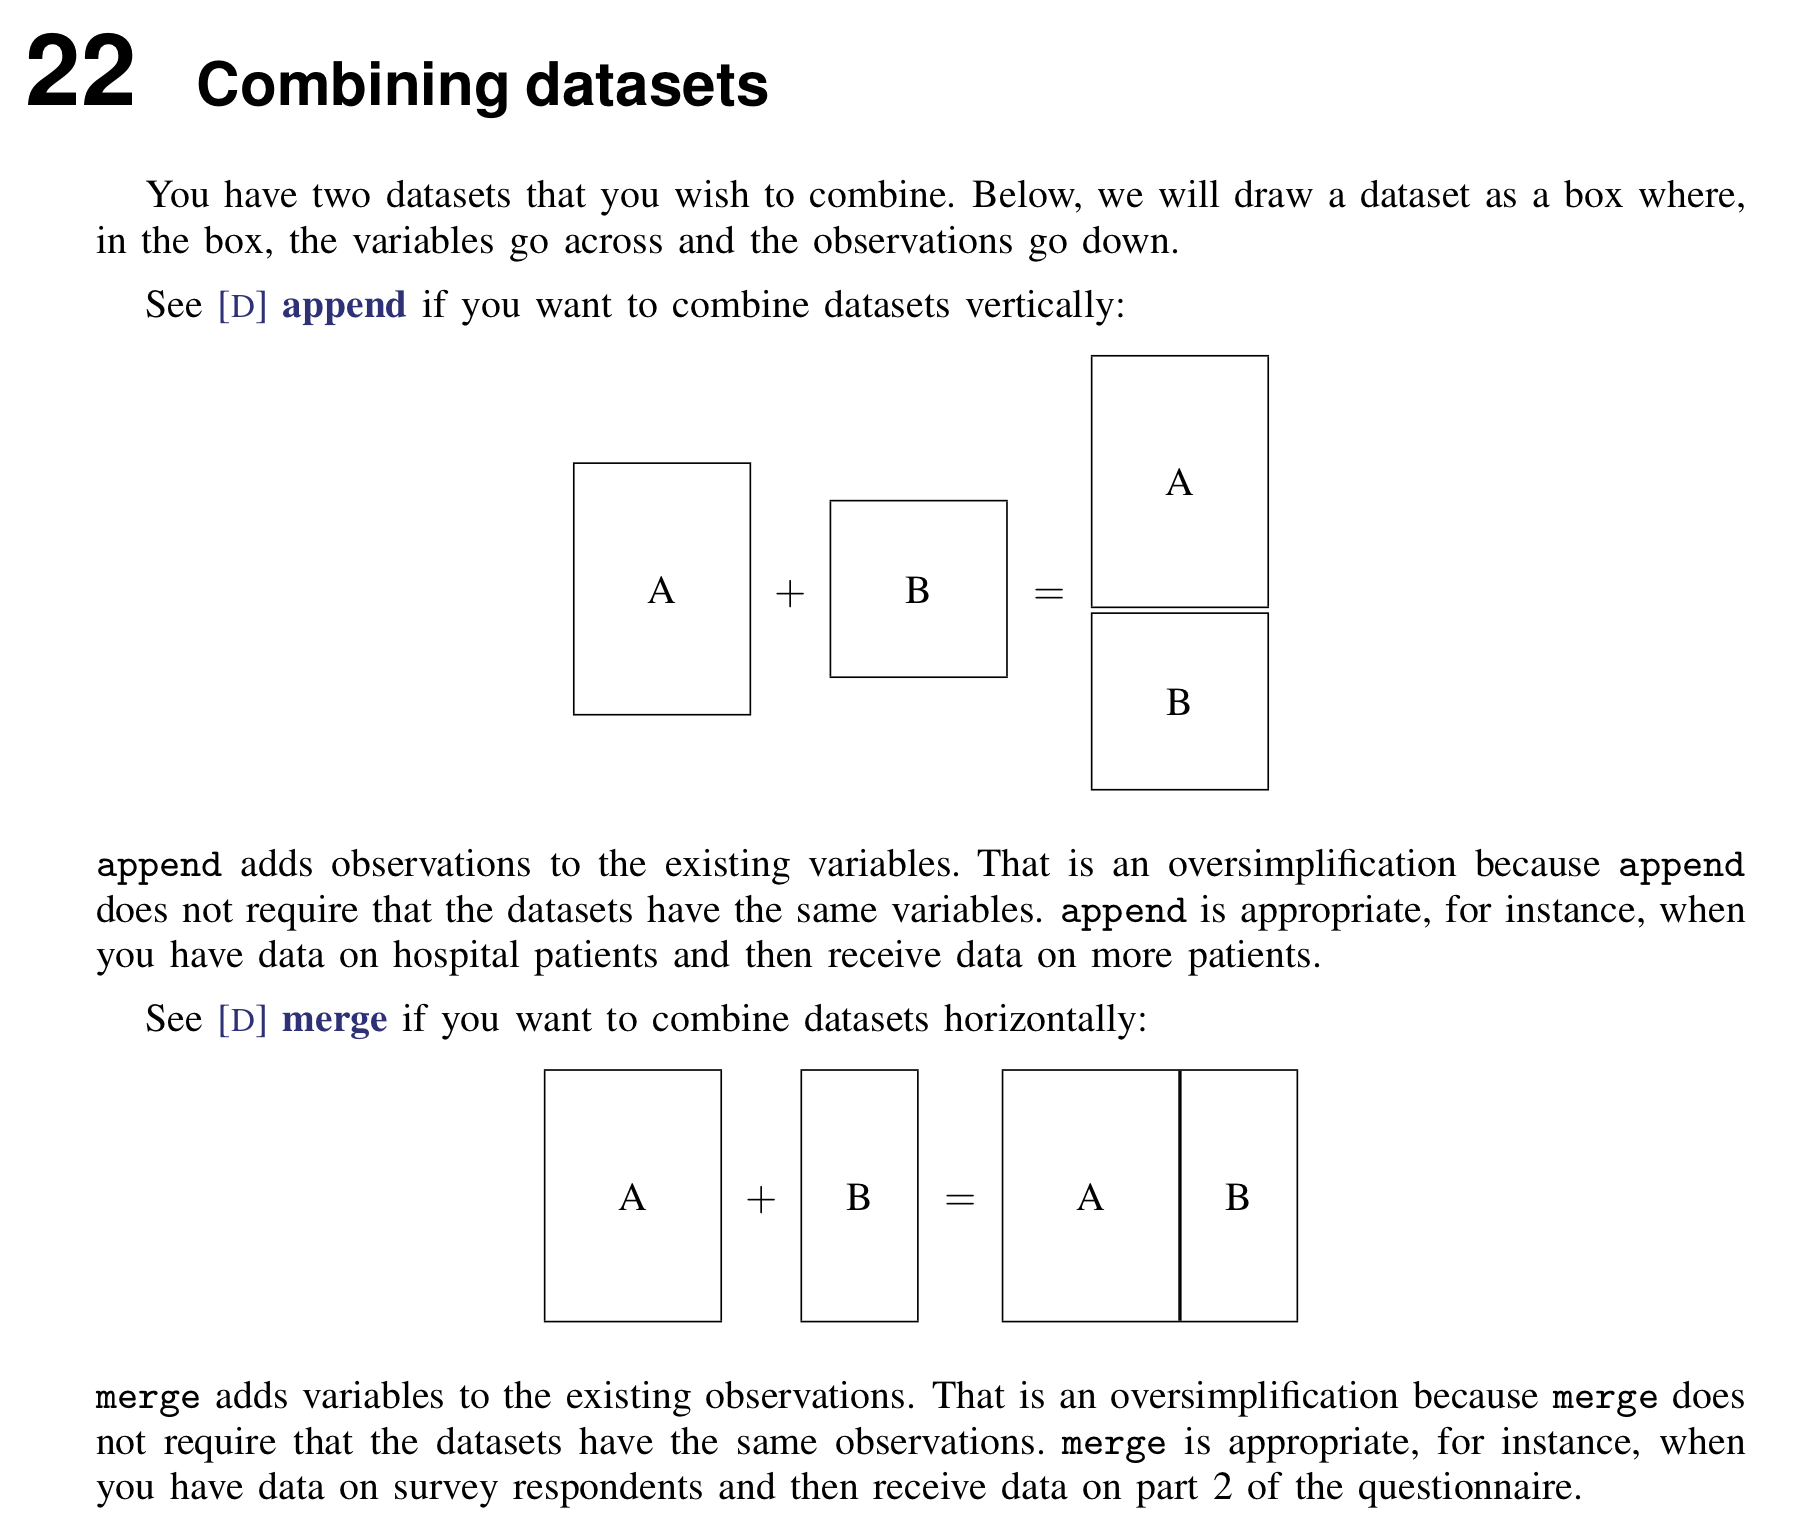 Combine data vertically or horizontally